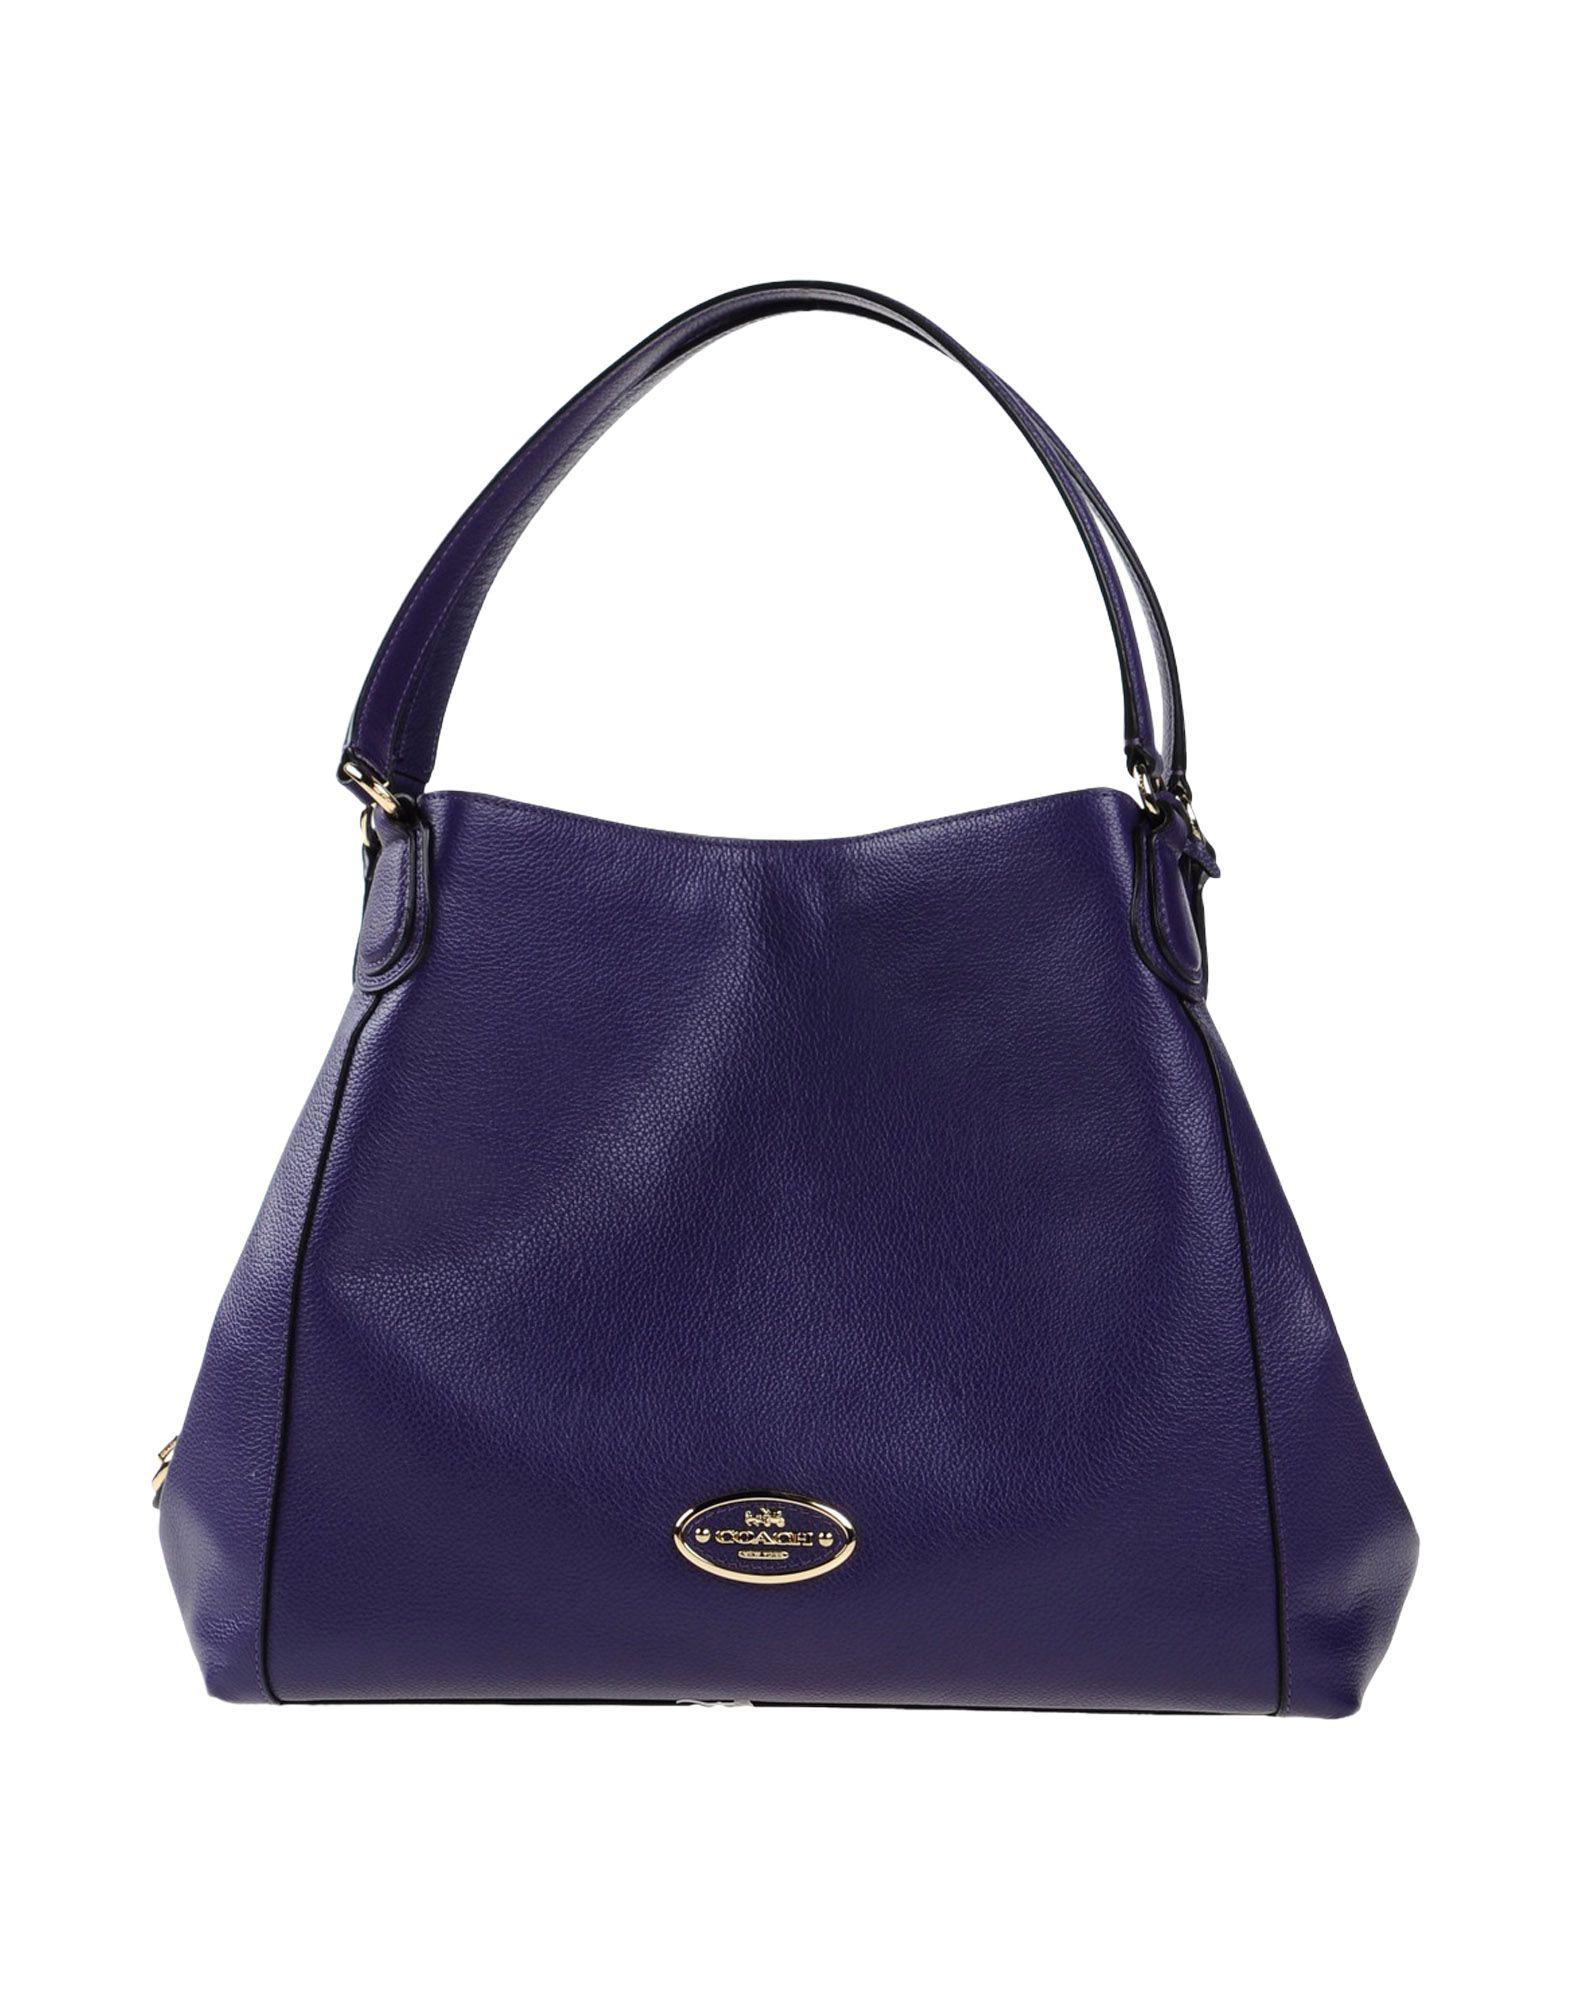 COACH Leather Handbag in Dark Purple (Purple) - Lyst